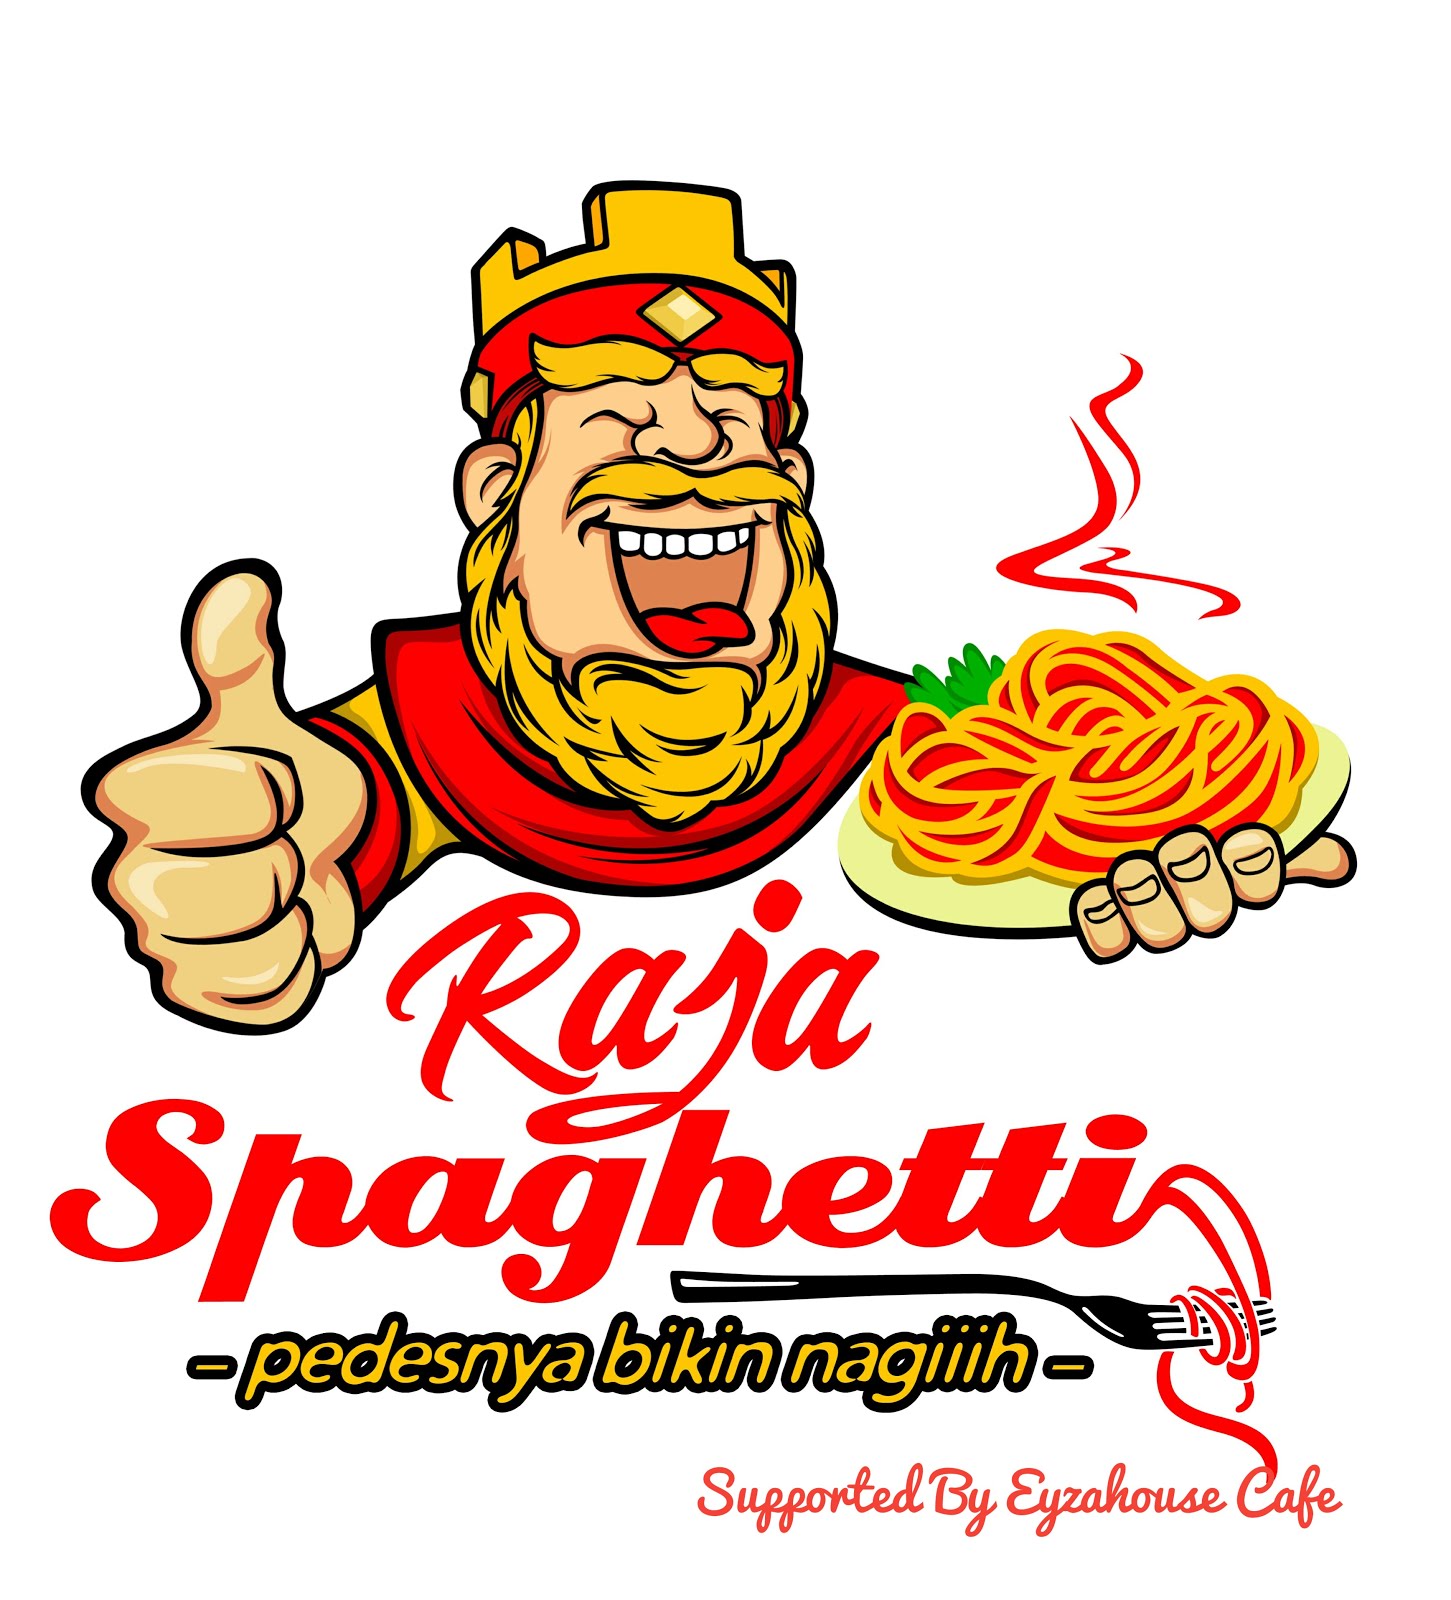 Raja Spaghetti